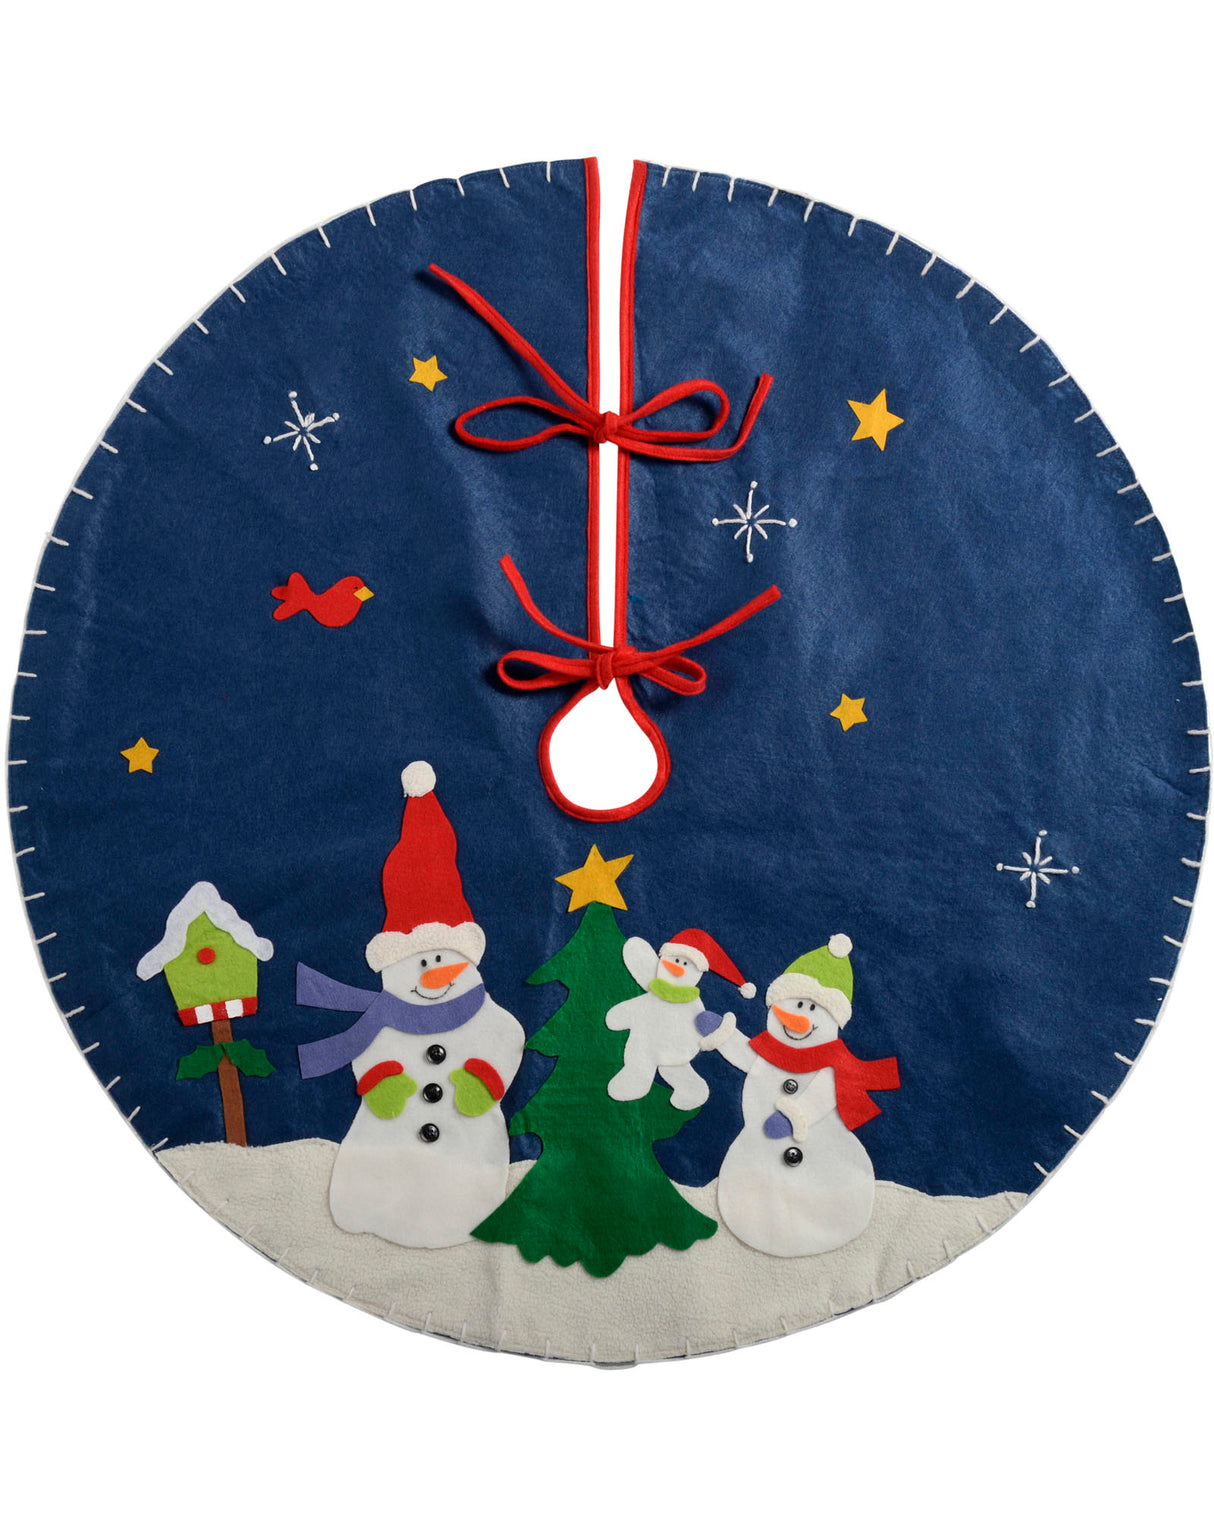 Snowman Christmas Tree Skirt, Blue, 90 cm